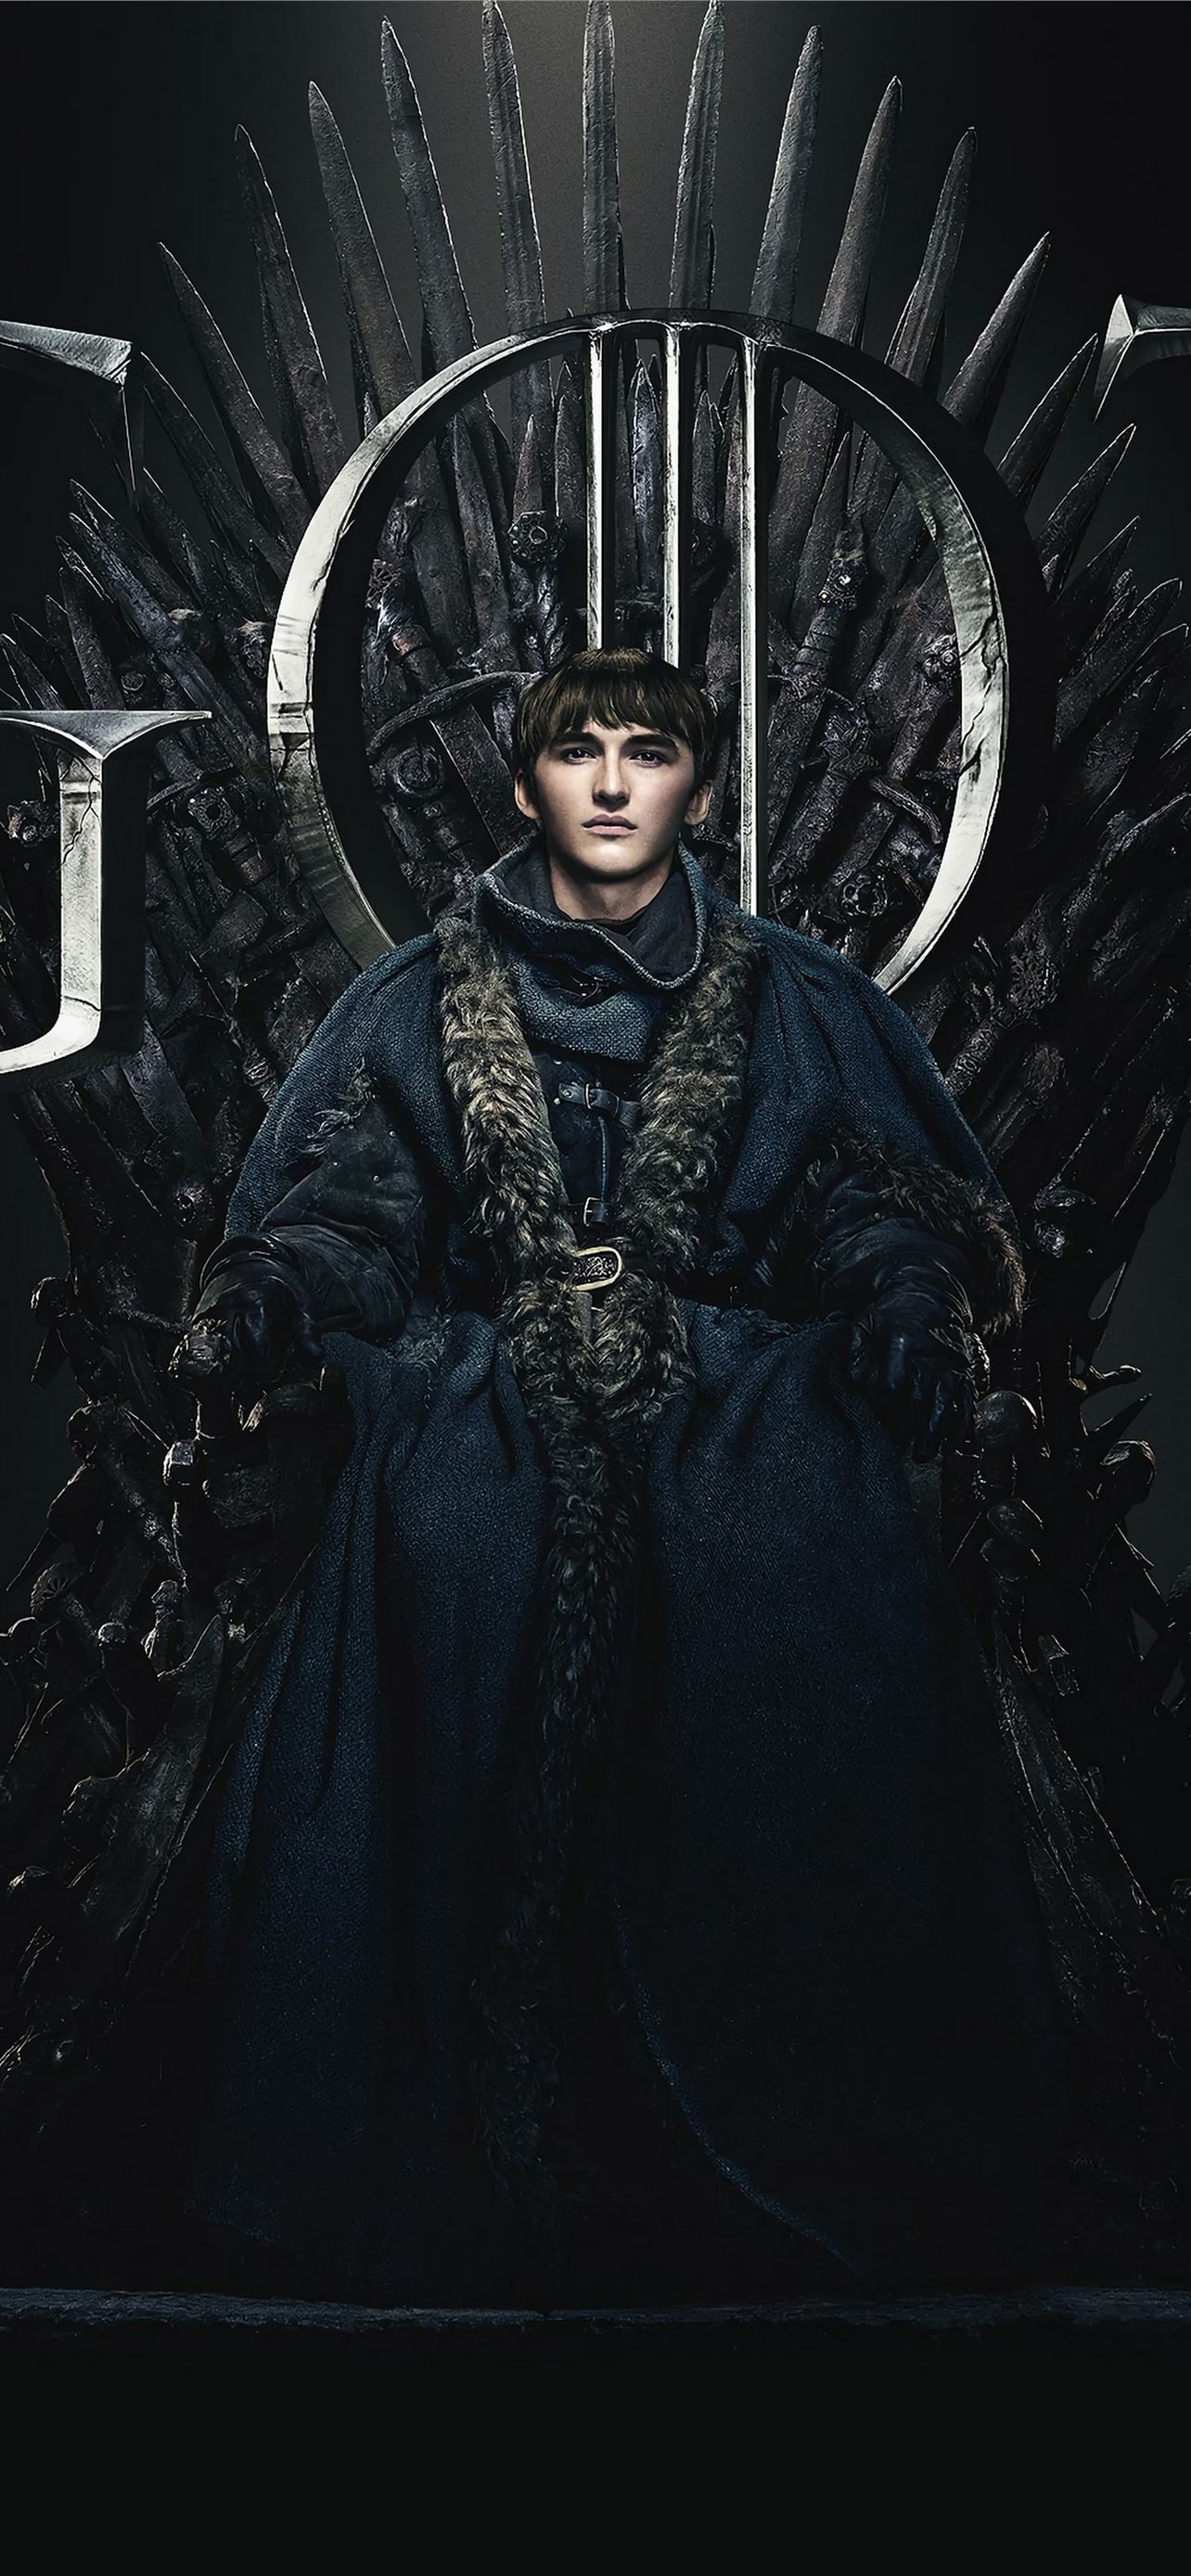 Bran Stark Game of Thrones Season 8 4K iPhone Wallpaper Free Download